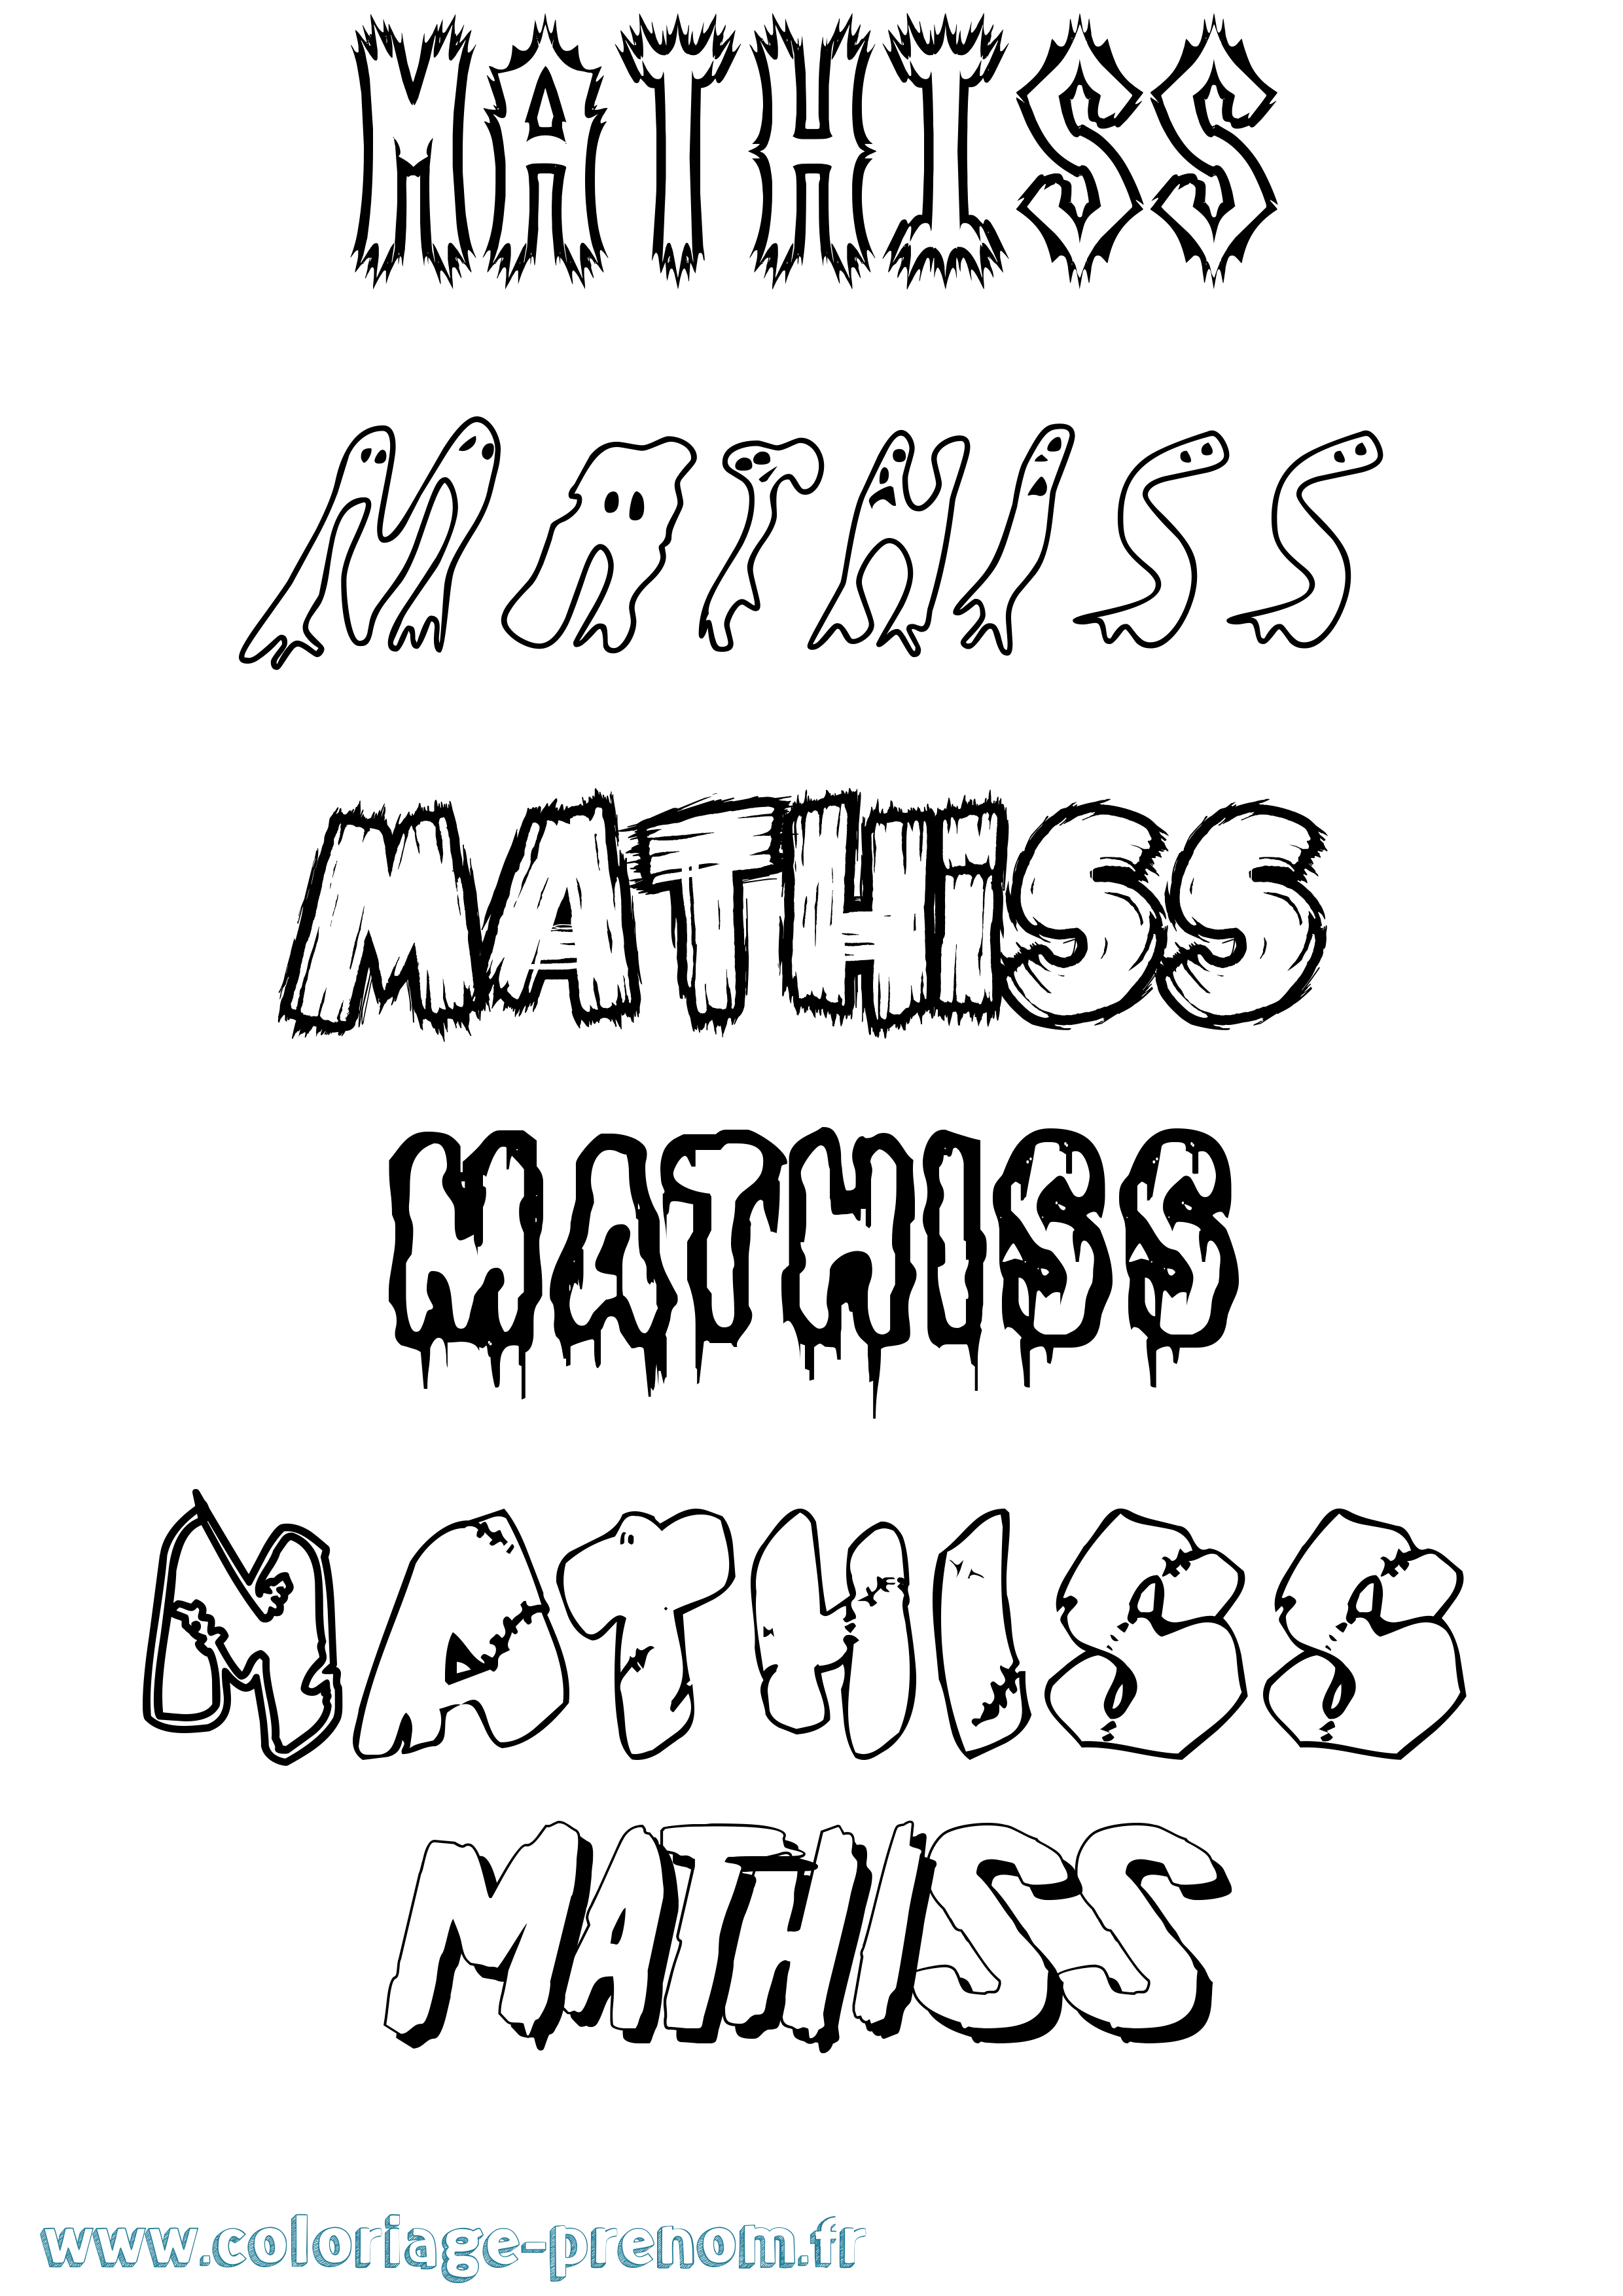 Coloriage prénom Mathiss Frisson